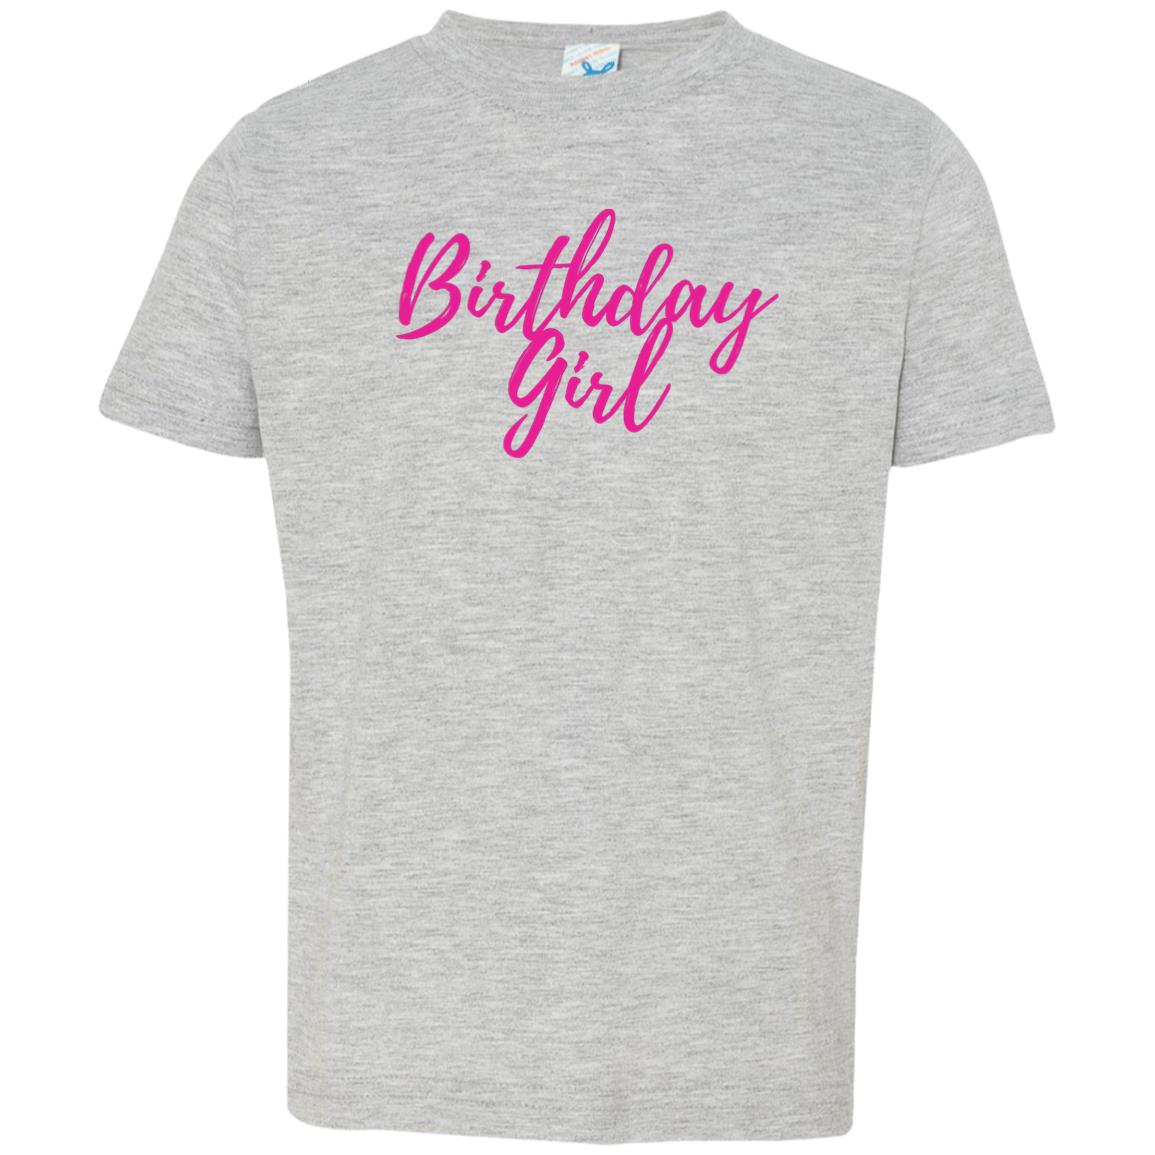 Birthday Girl (Pink Print) 3321 Toddler Jersey T-Shirt